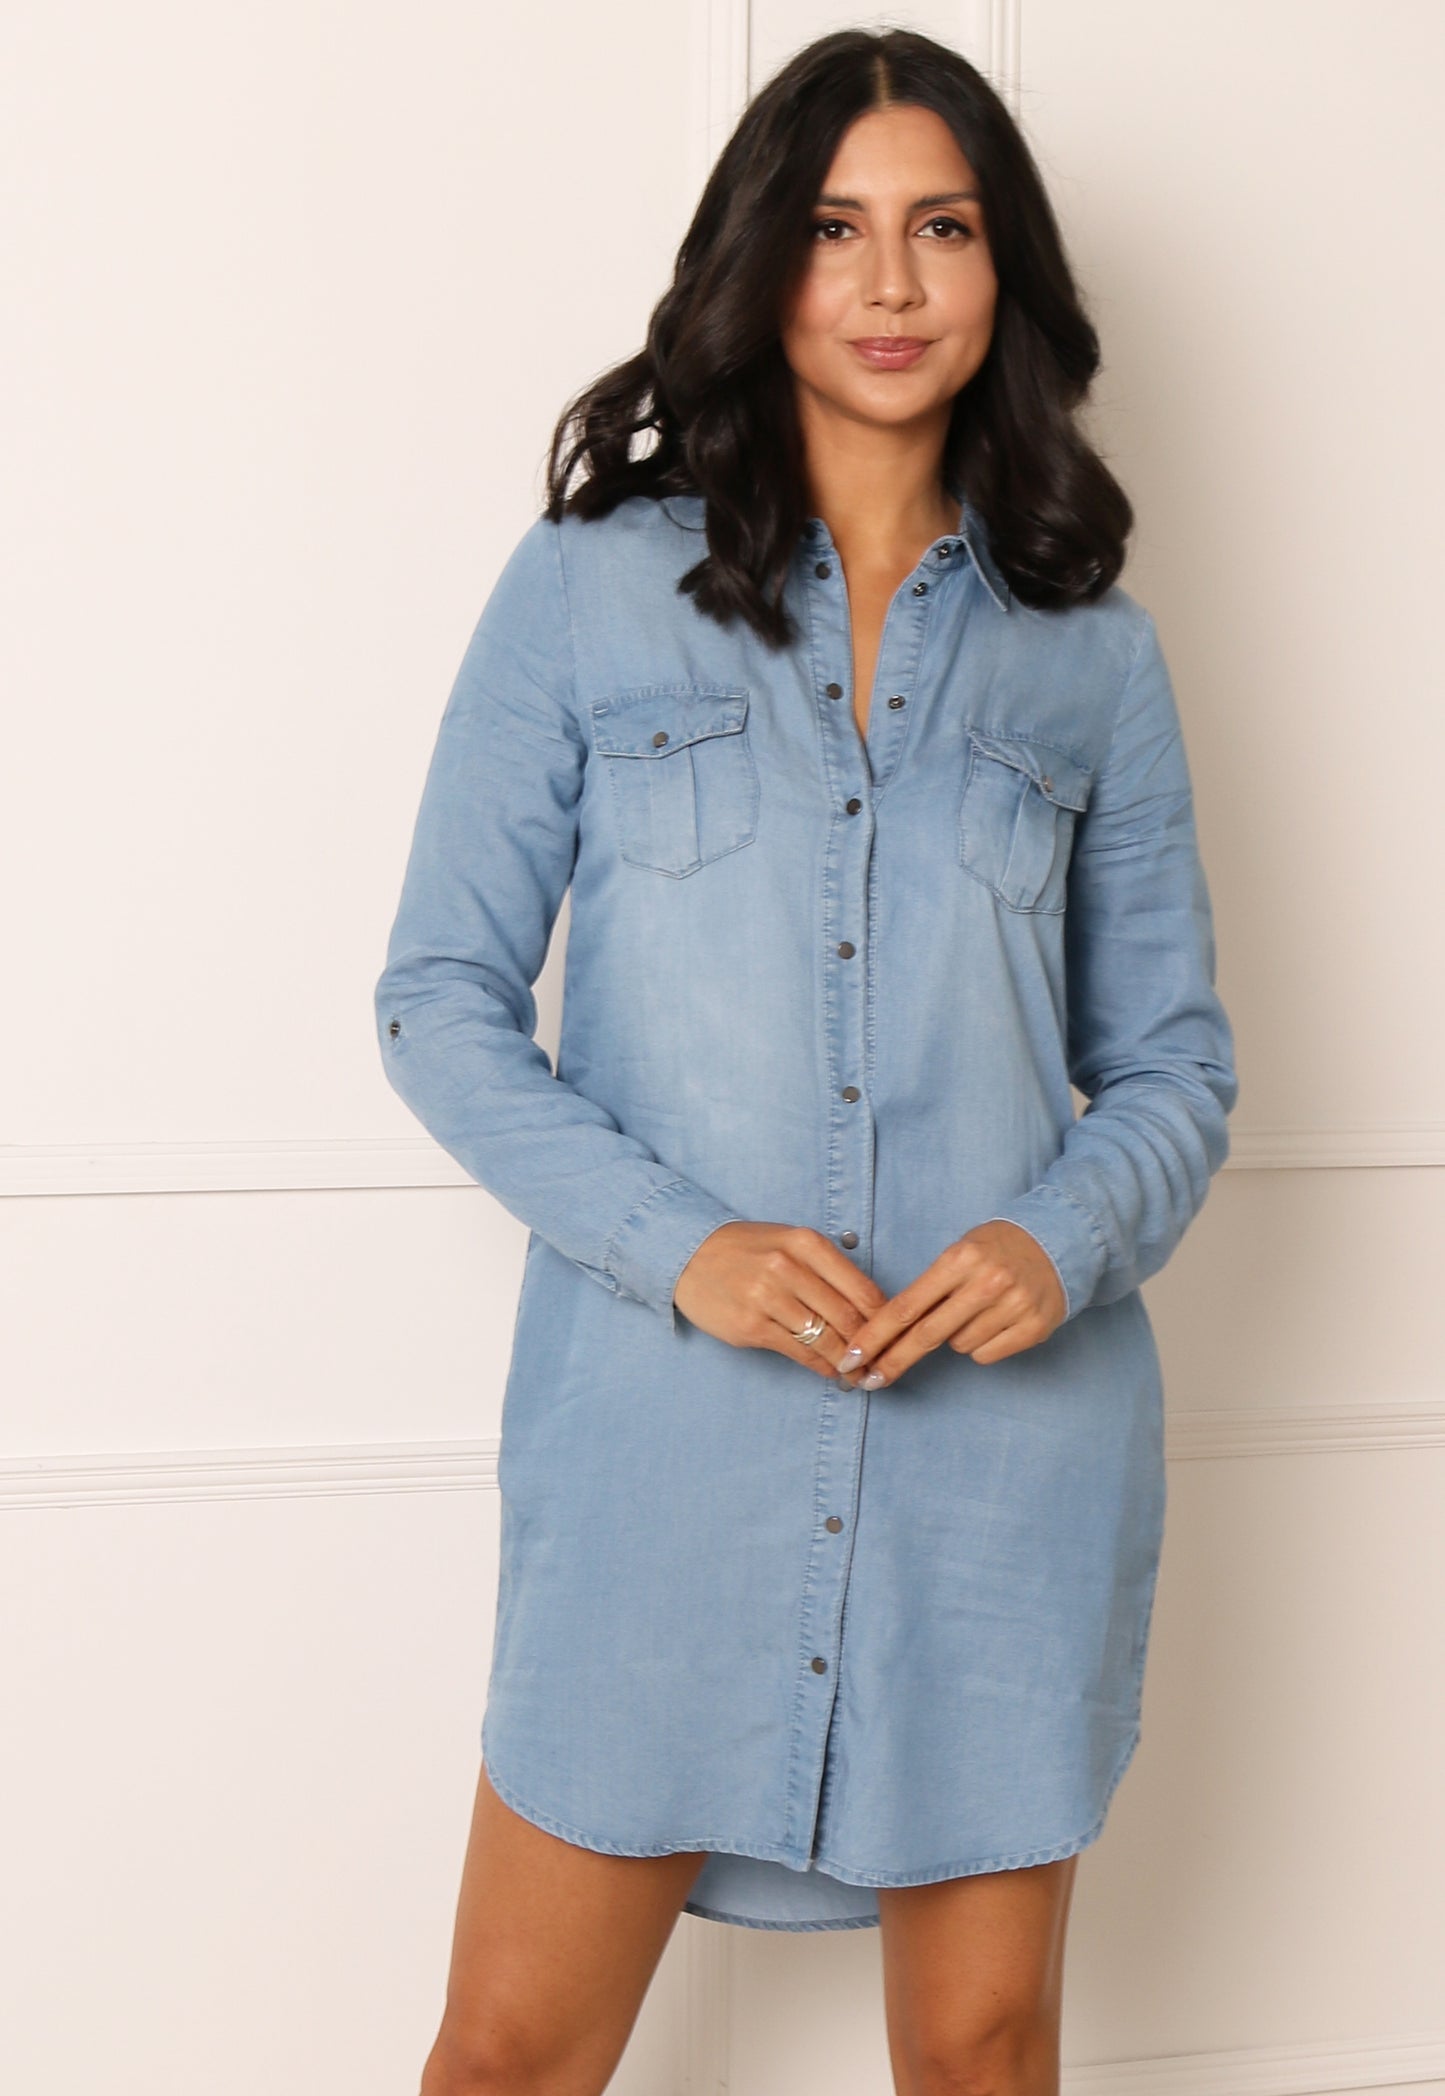 VERO MODA Silla Tencel Denim Button Mini Shirt Dress with Three Quarter Sleeves in Blue - One Nation Clothing